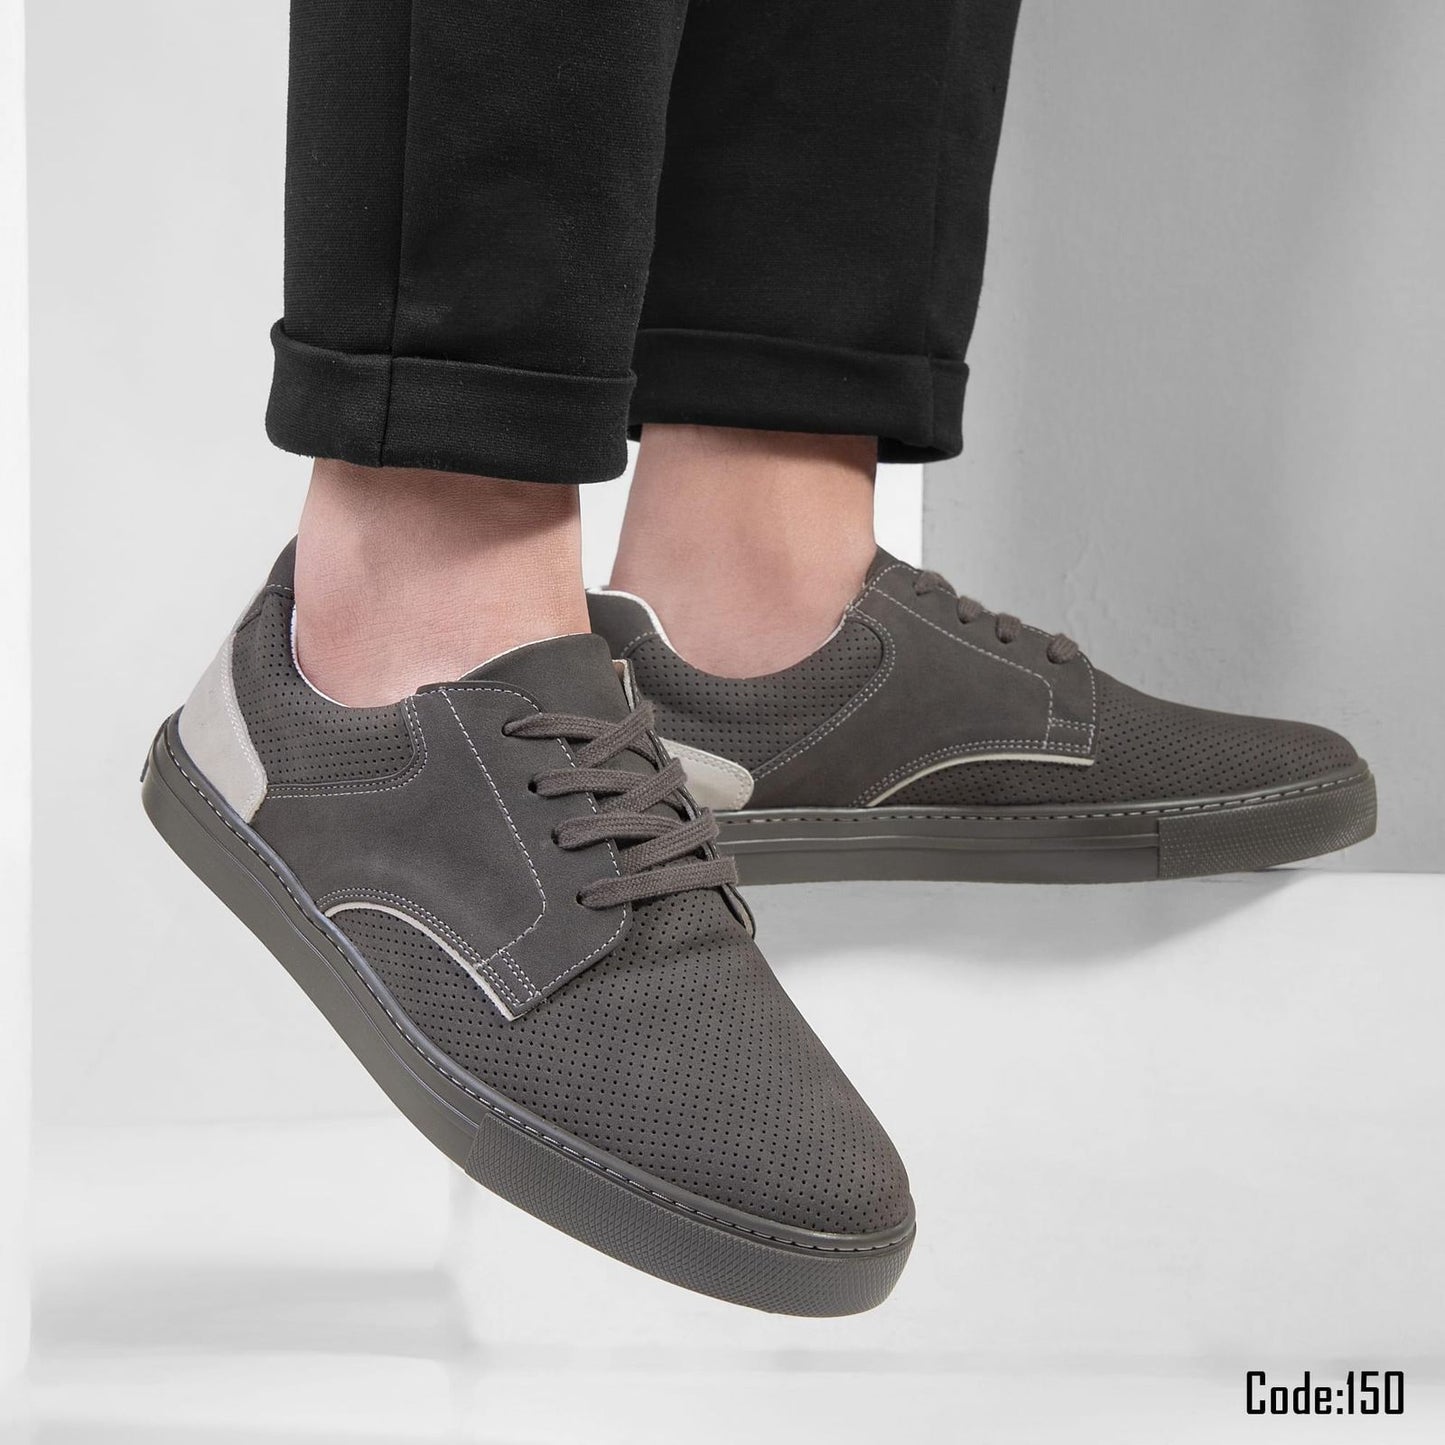 SALE! HAZ-EG150 Dark Grey Chamois Shoes